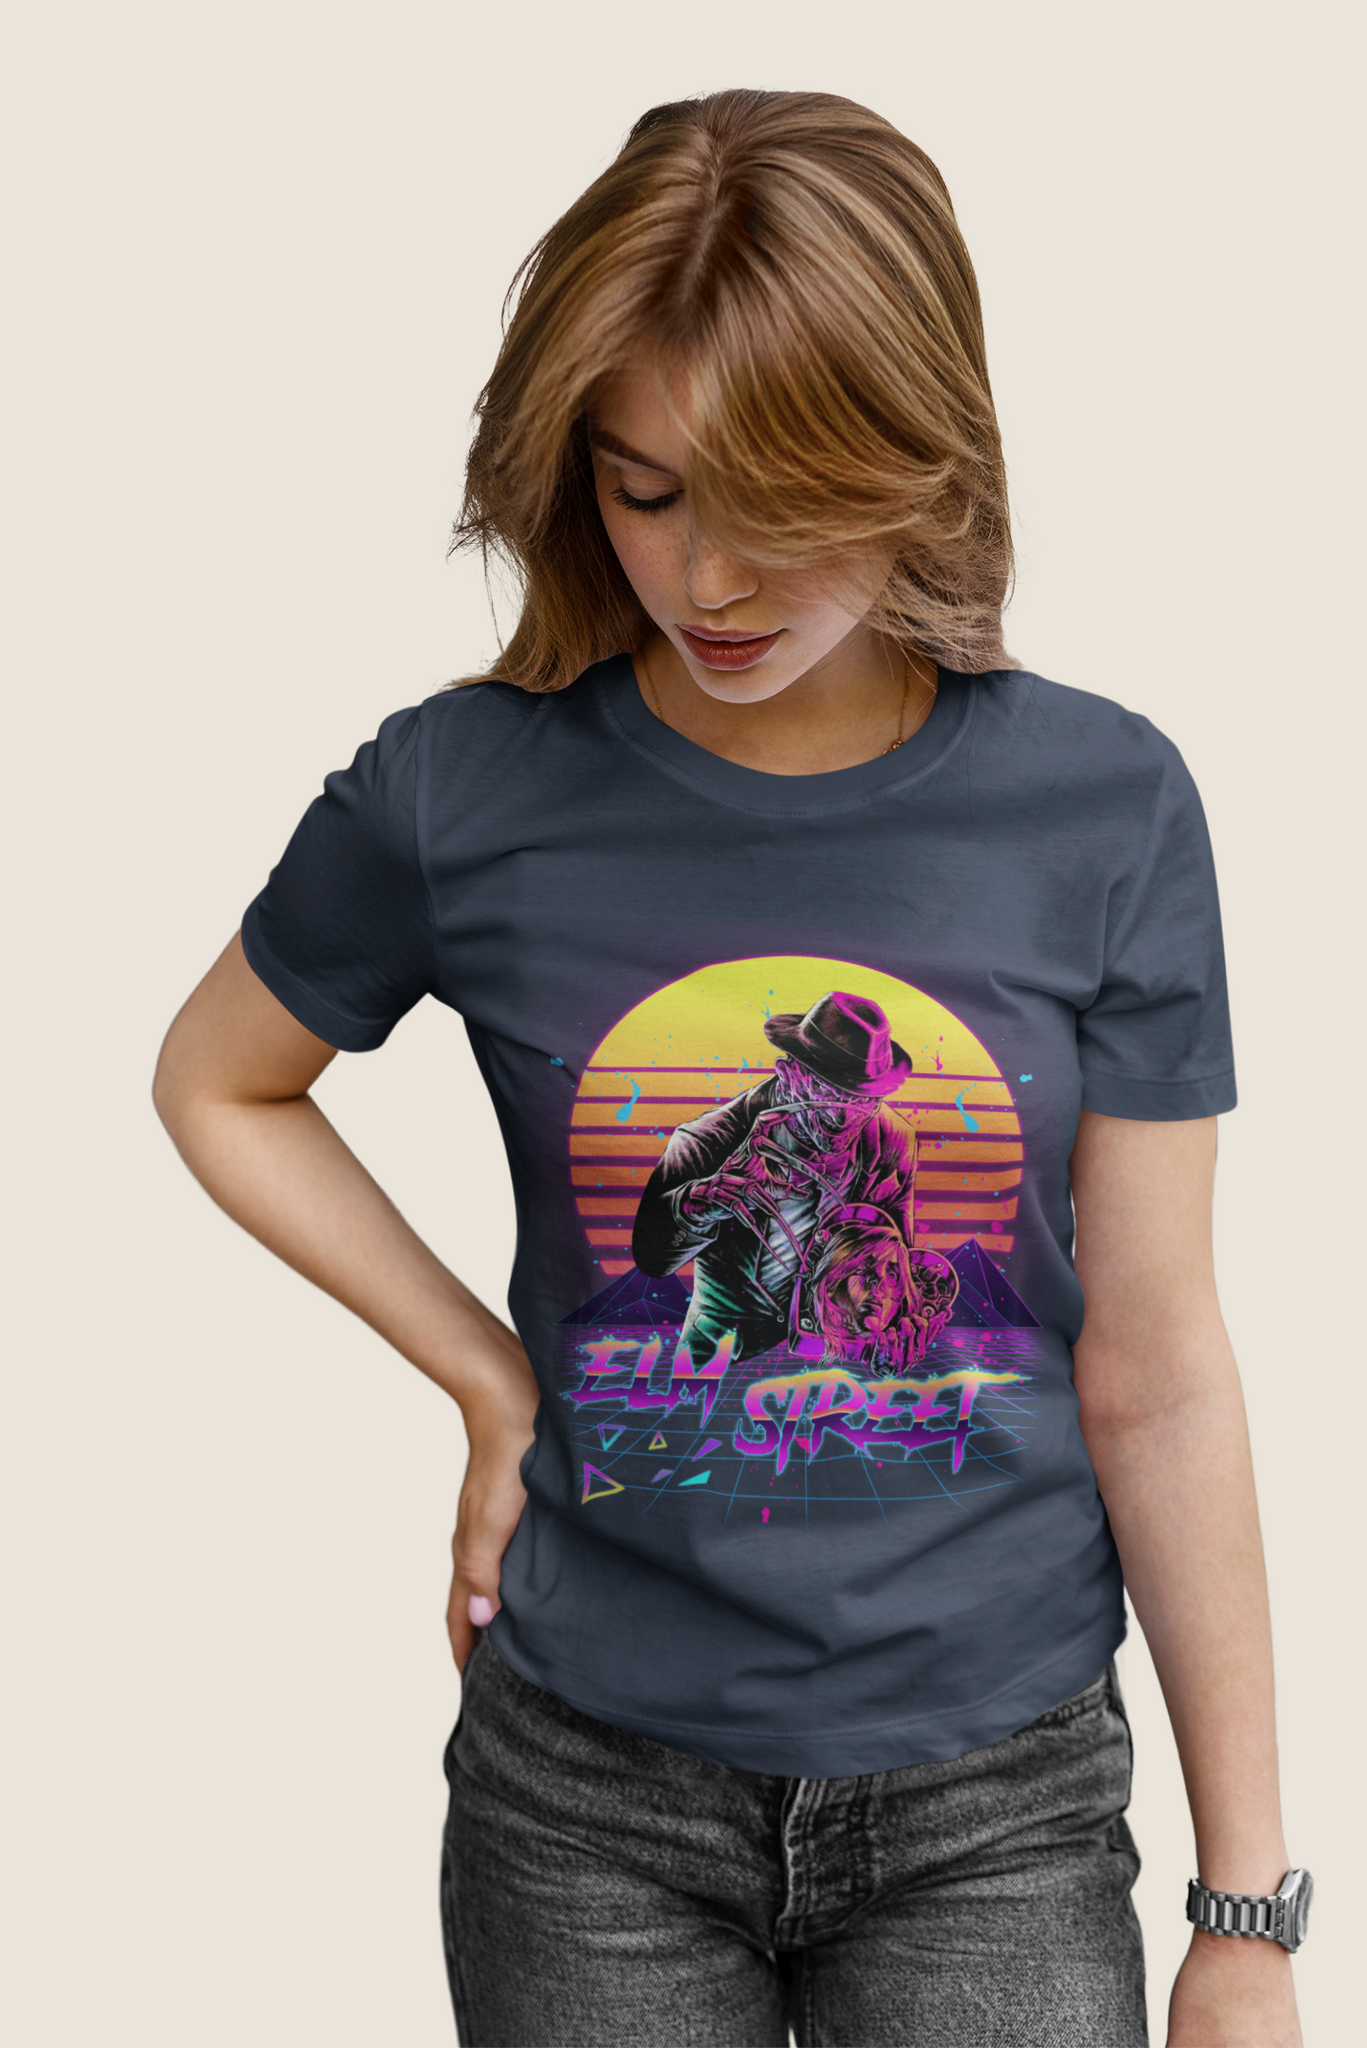 Nightmare On Elm Street Retro T Shirt, Freddy Krueger T Shirt, Elm Street Tshirt, Halloween Gifts